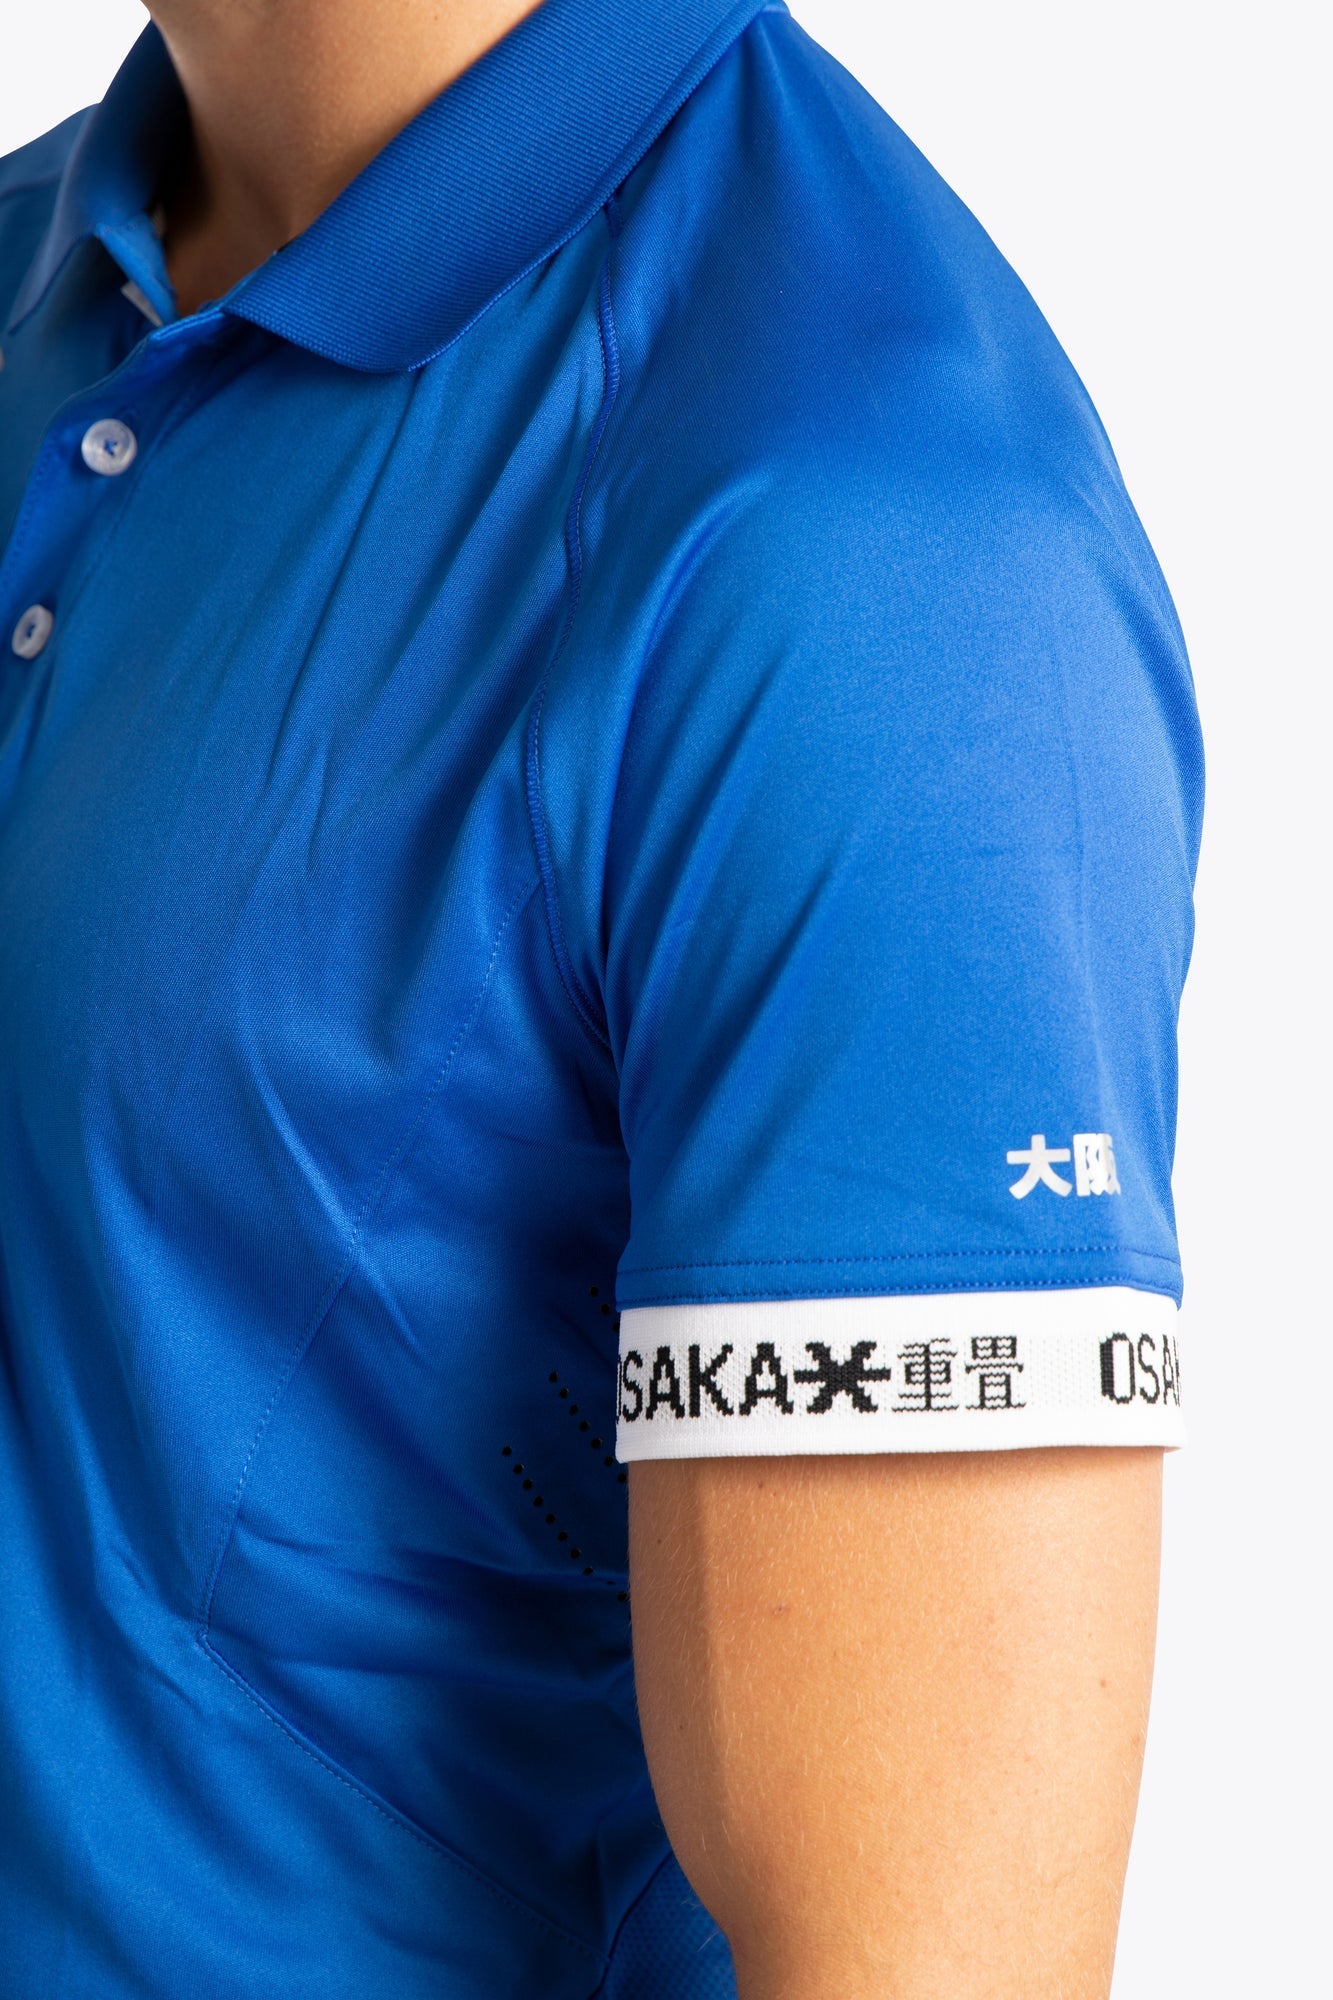 Osaka Men's Polo Jersey (Royal Blue)